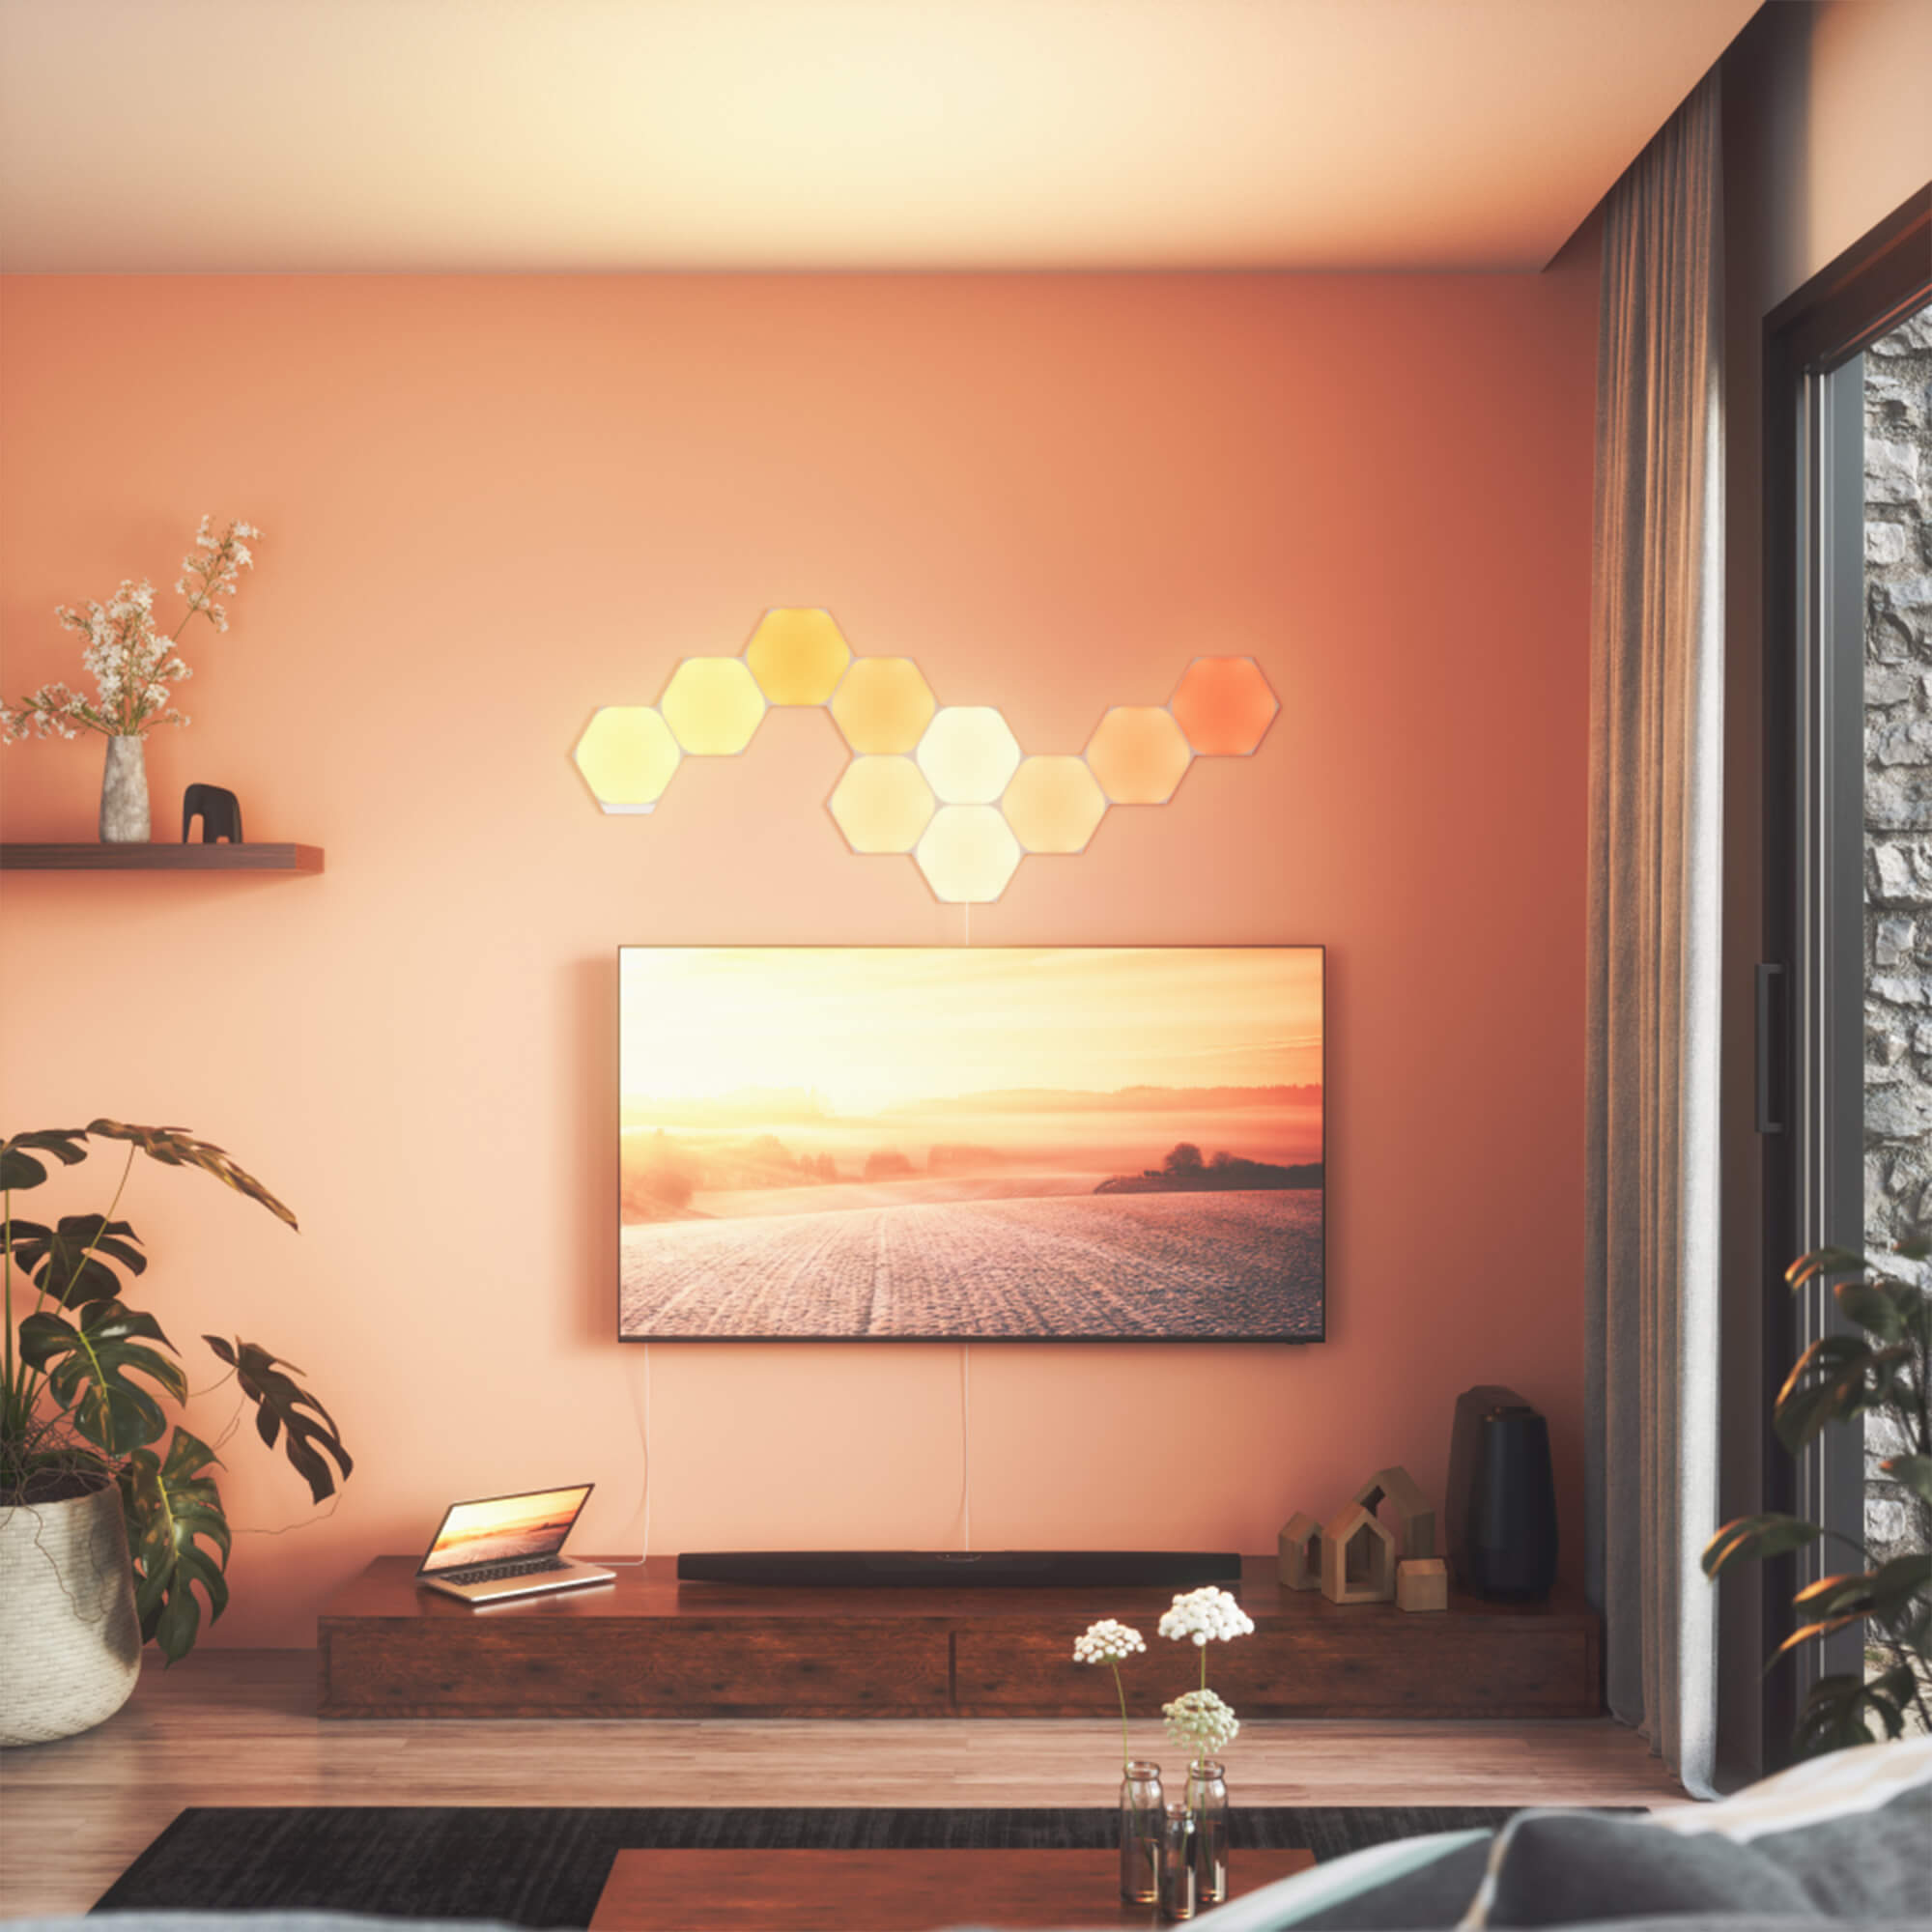 Nanoleaf hexagon lights shown in warm colors lighting up a living room.